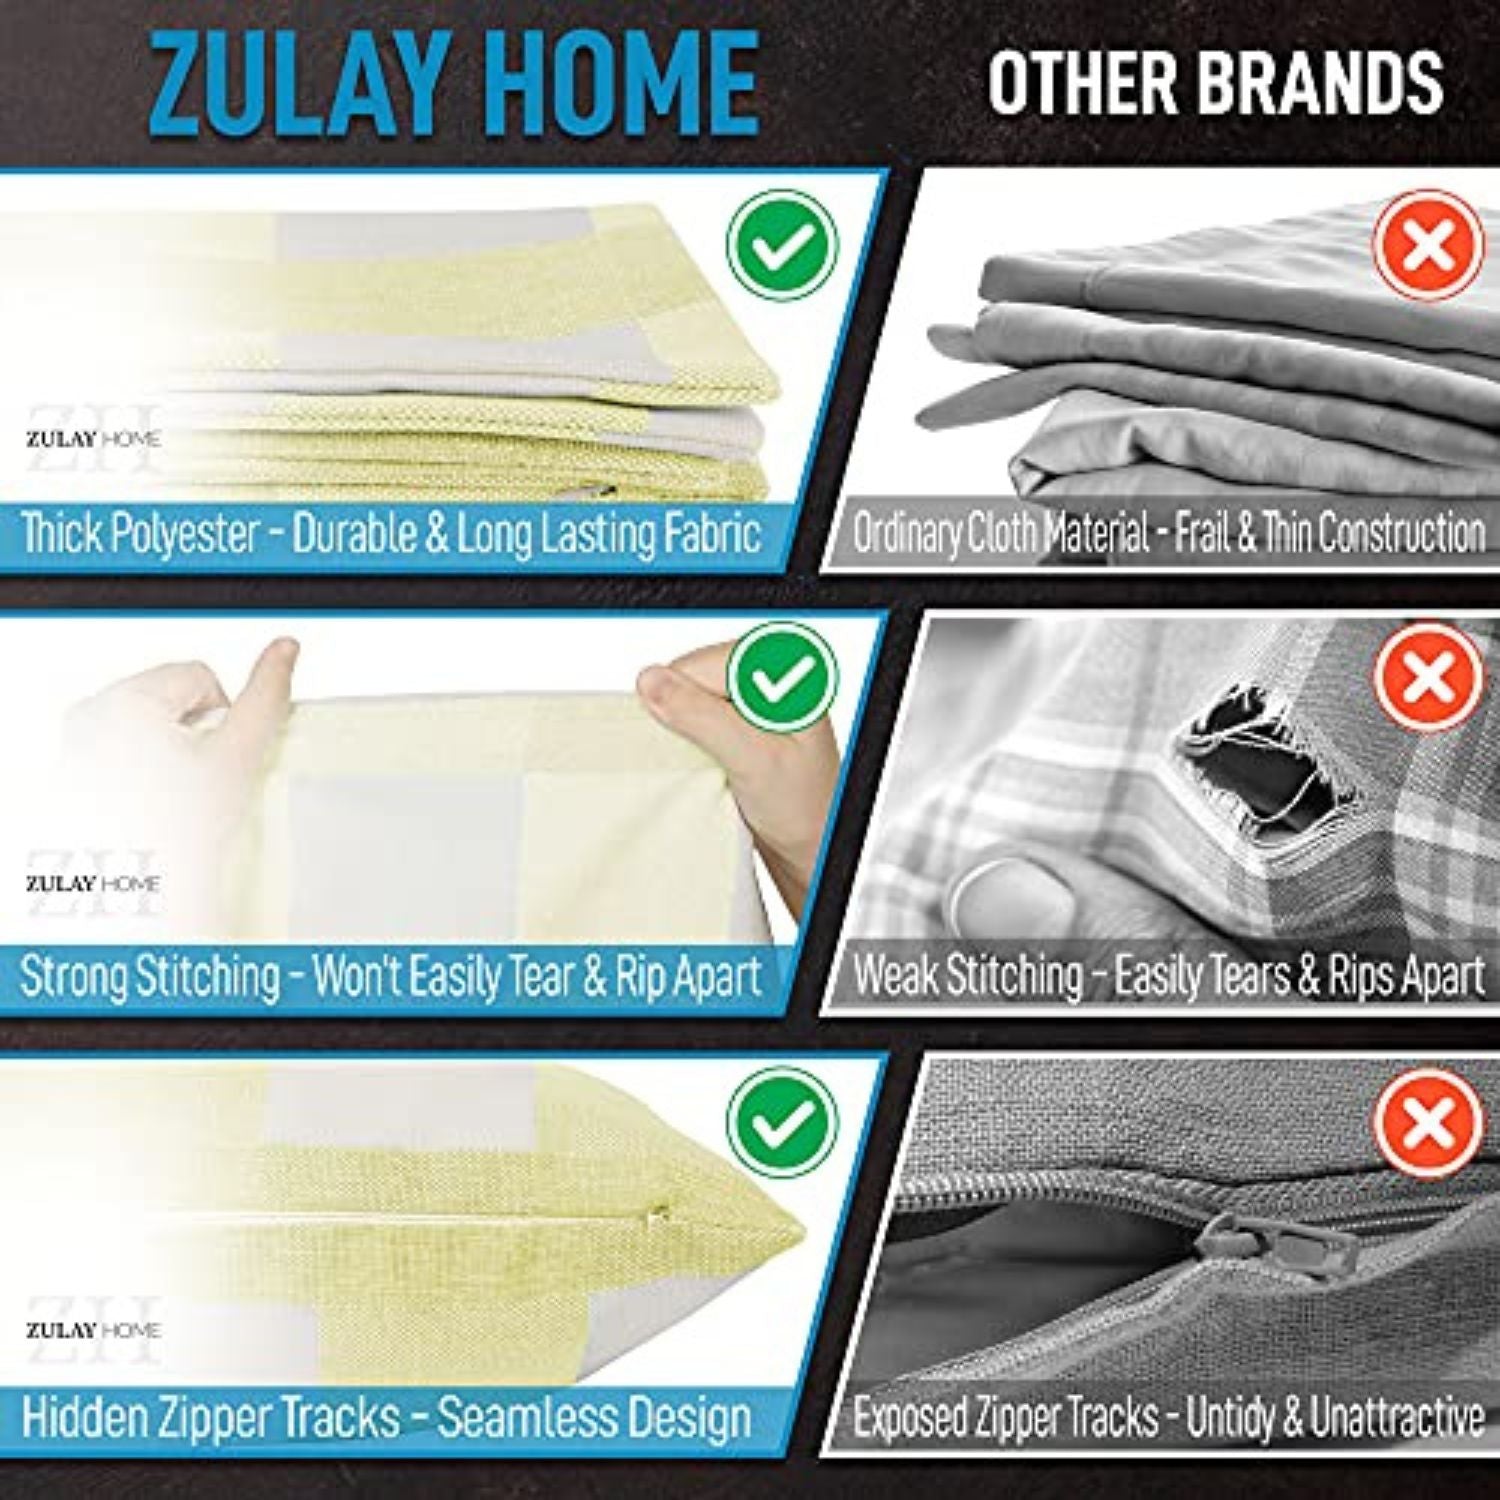 Zulay Home Buffalo Plaid Throw Pillow Covers